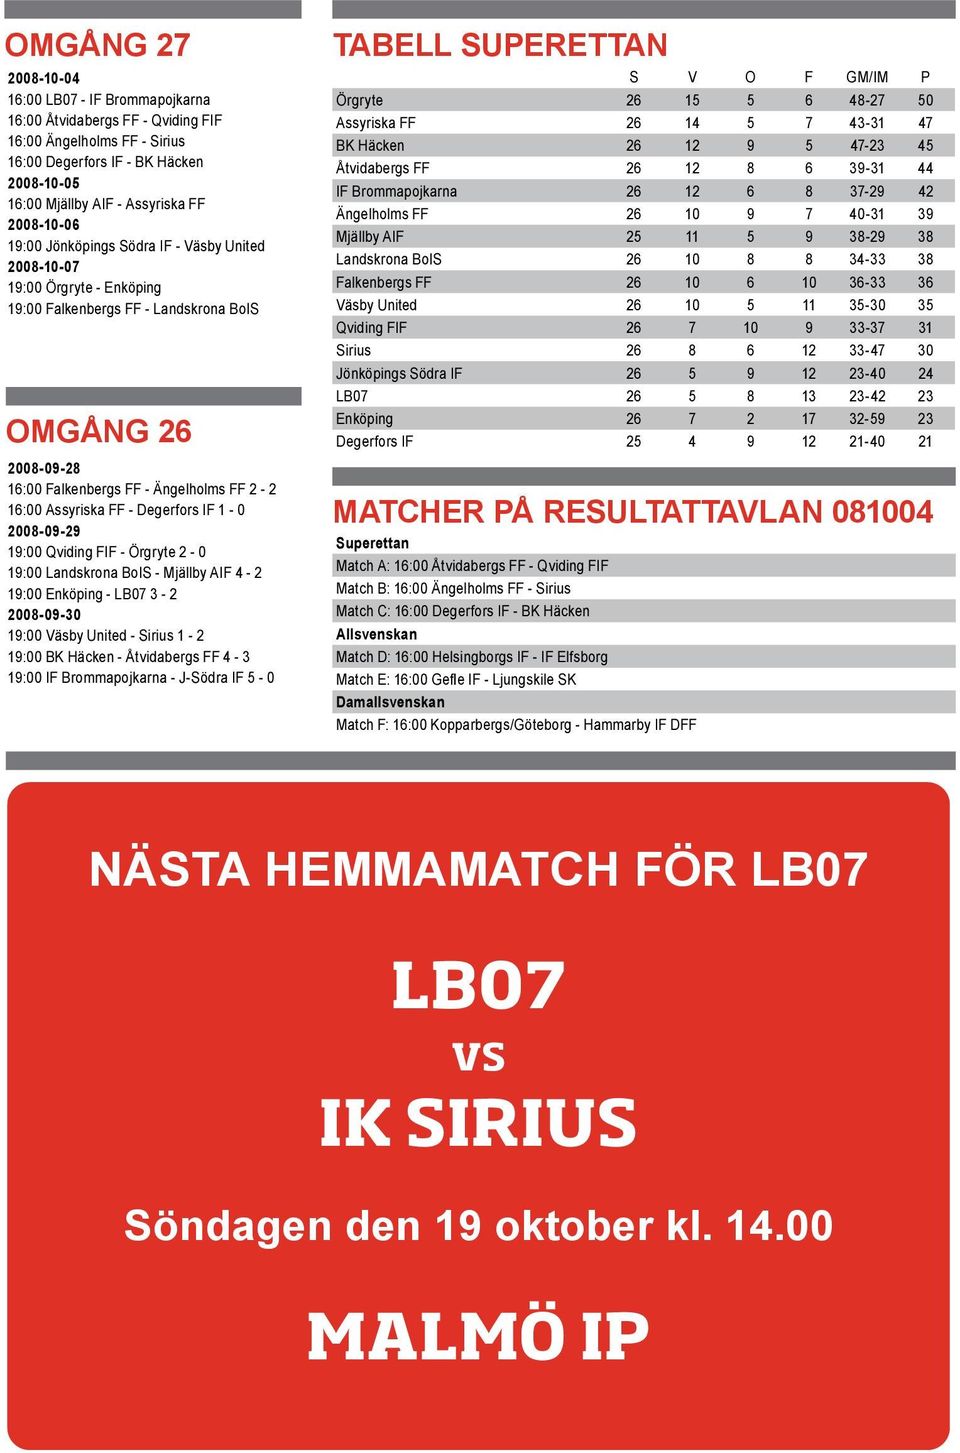 Assyriska FF - Degerfors IF 1-0 2008-09-29 19:00 Qviding FIF - Örgryte 2-0 19:00 Landskrona BoIS - Mjällby AIF 4-2 19:00 Enköping - LB07 3-2 2008-09-30 19:00 Väsby United - Sirius 1-2 19:00 BK Häcken